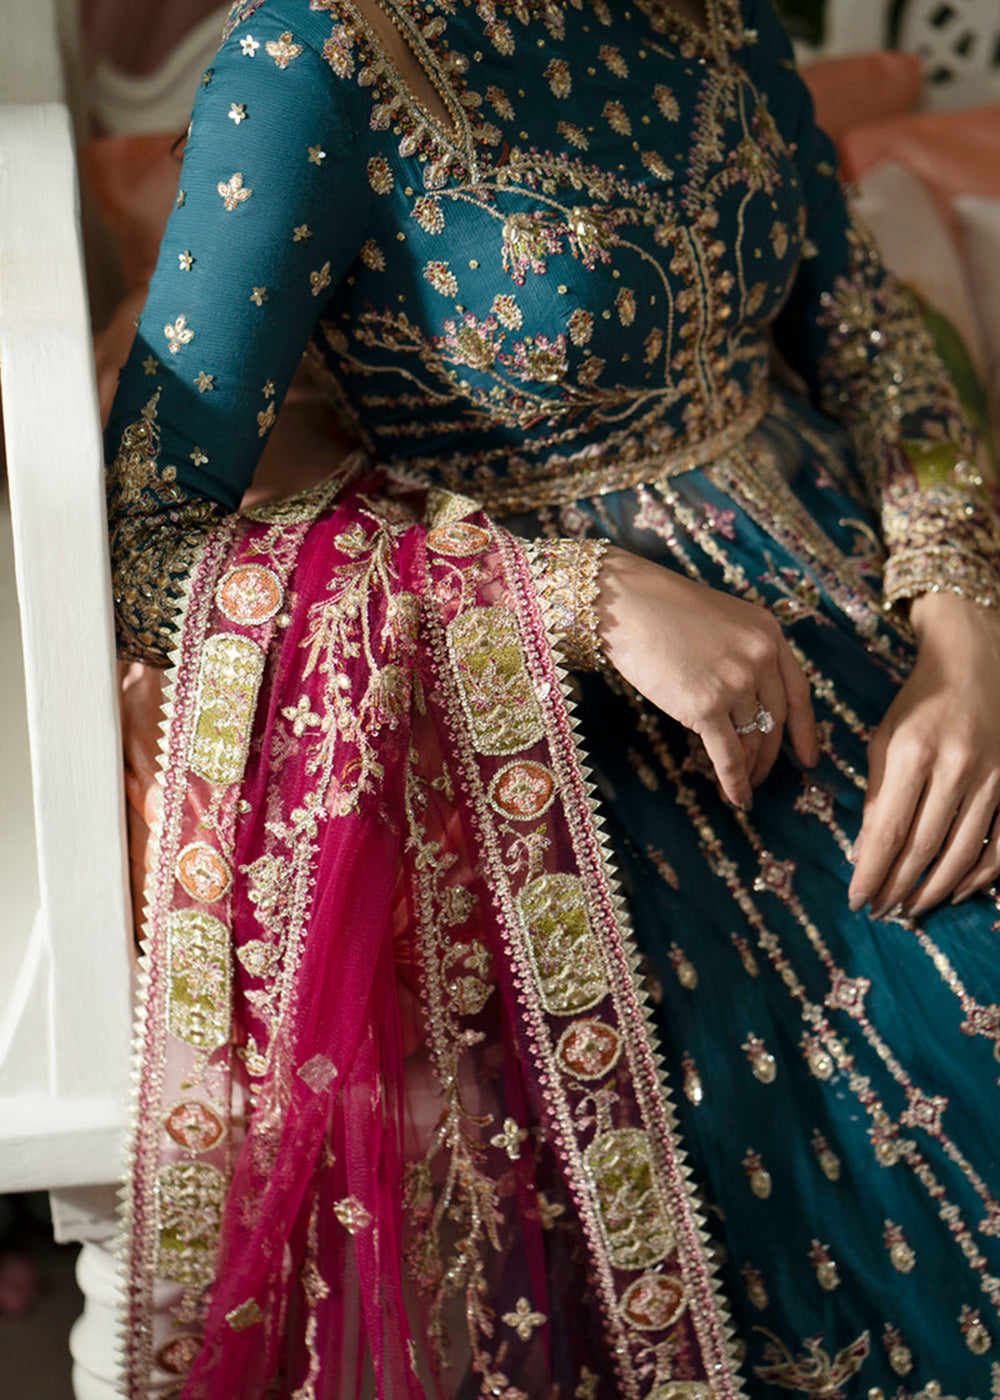 Buy Now Dilnaaz Wedding Formals 2023 by Qalamkar | DN-02 - SABRINA Online in USA, UK, Canada & Worldwide at Empress Clothing. 